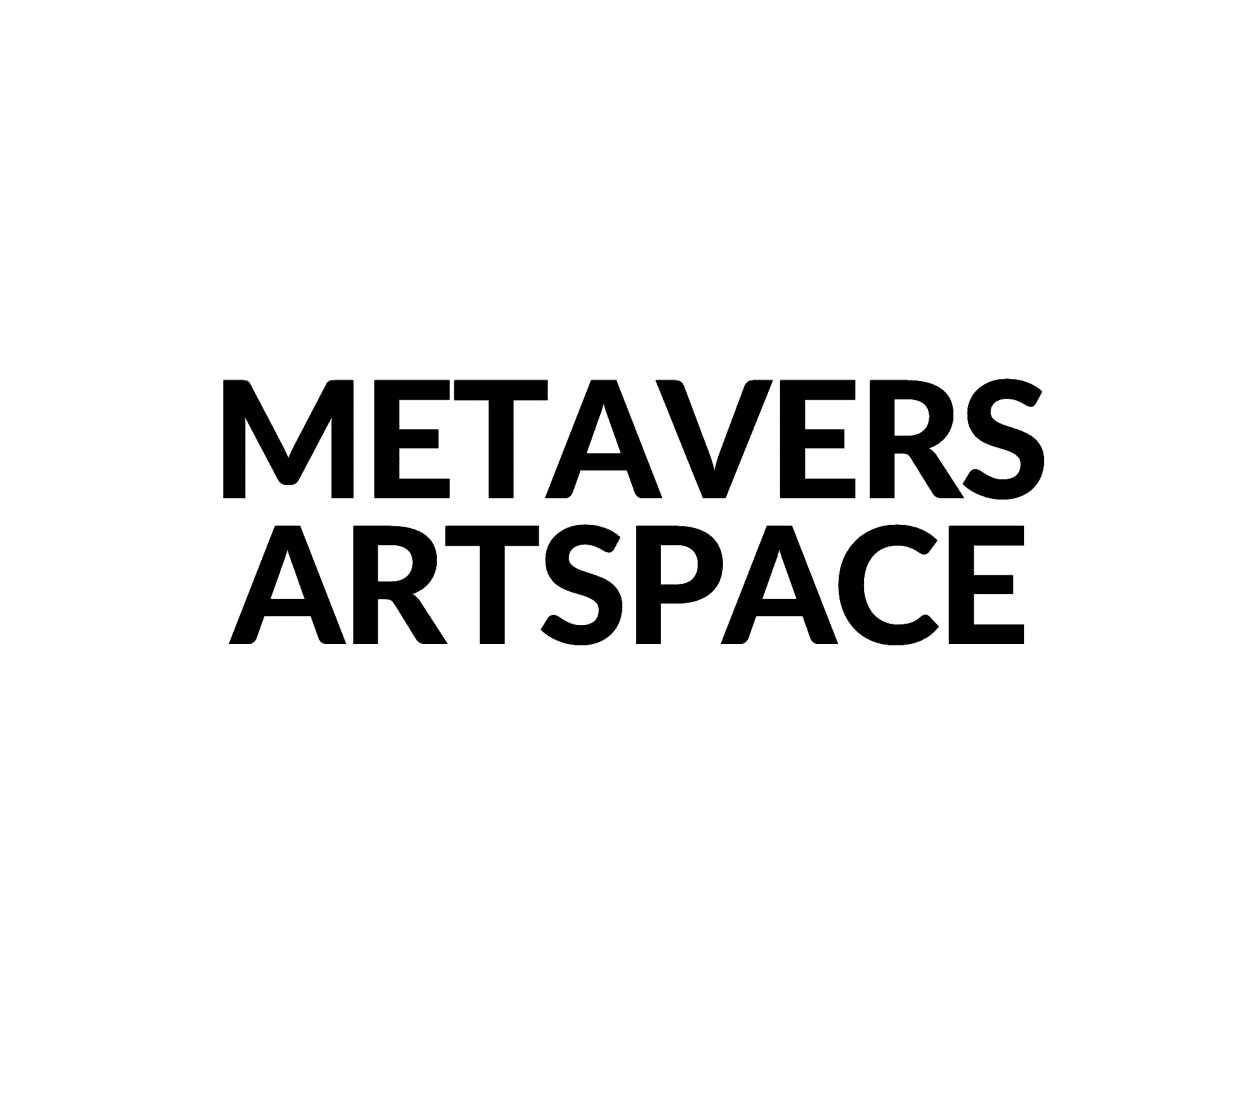 MetaversArtspace